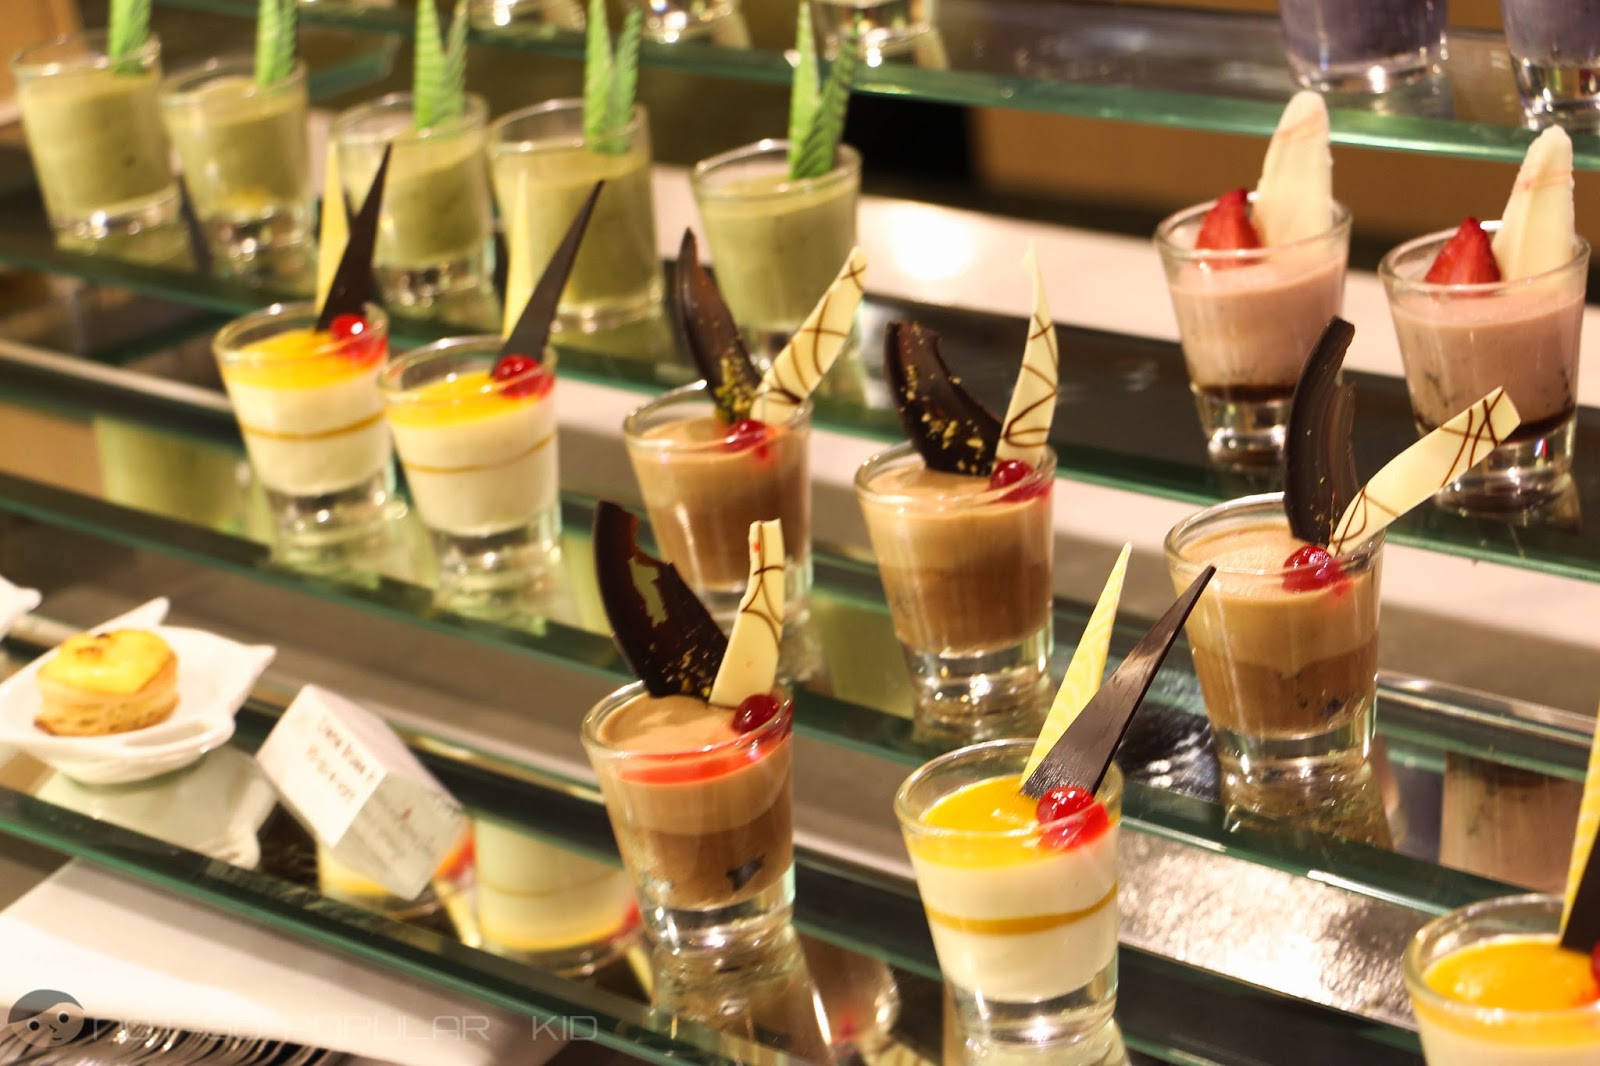 Desserts in a shot-glass in Midas Cafe!